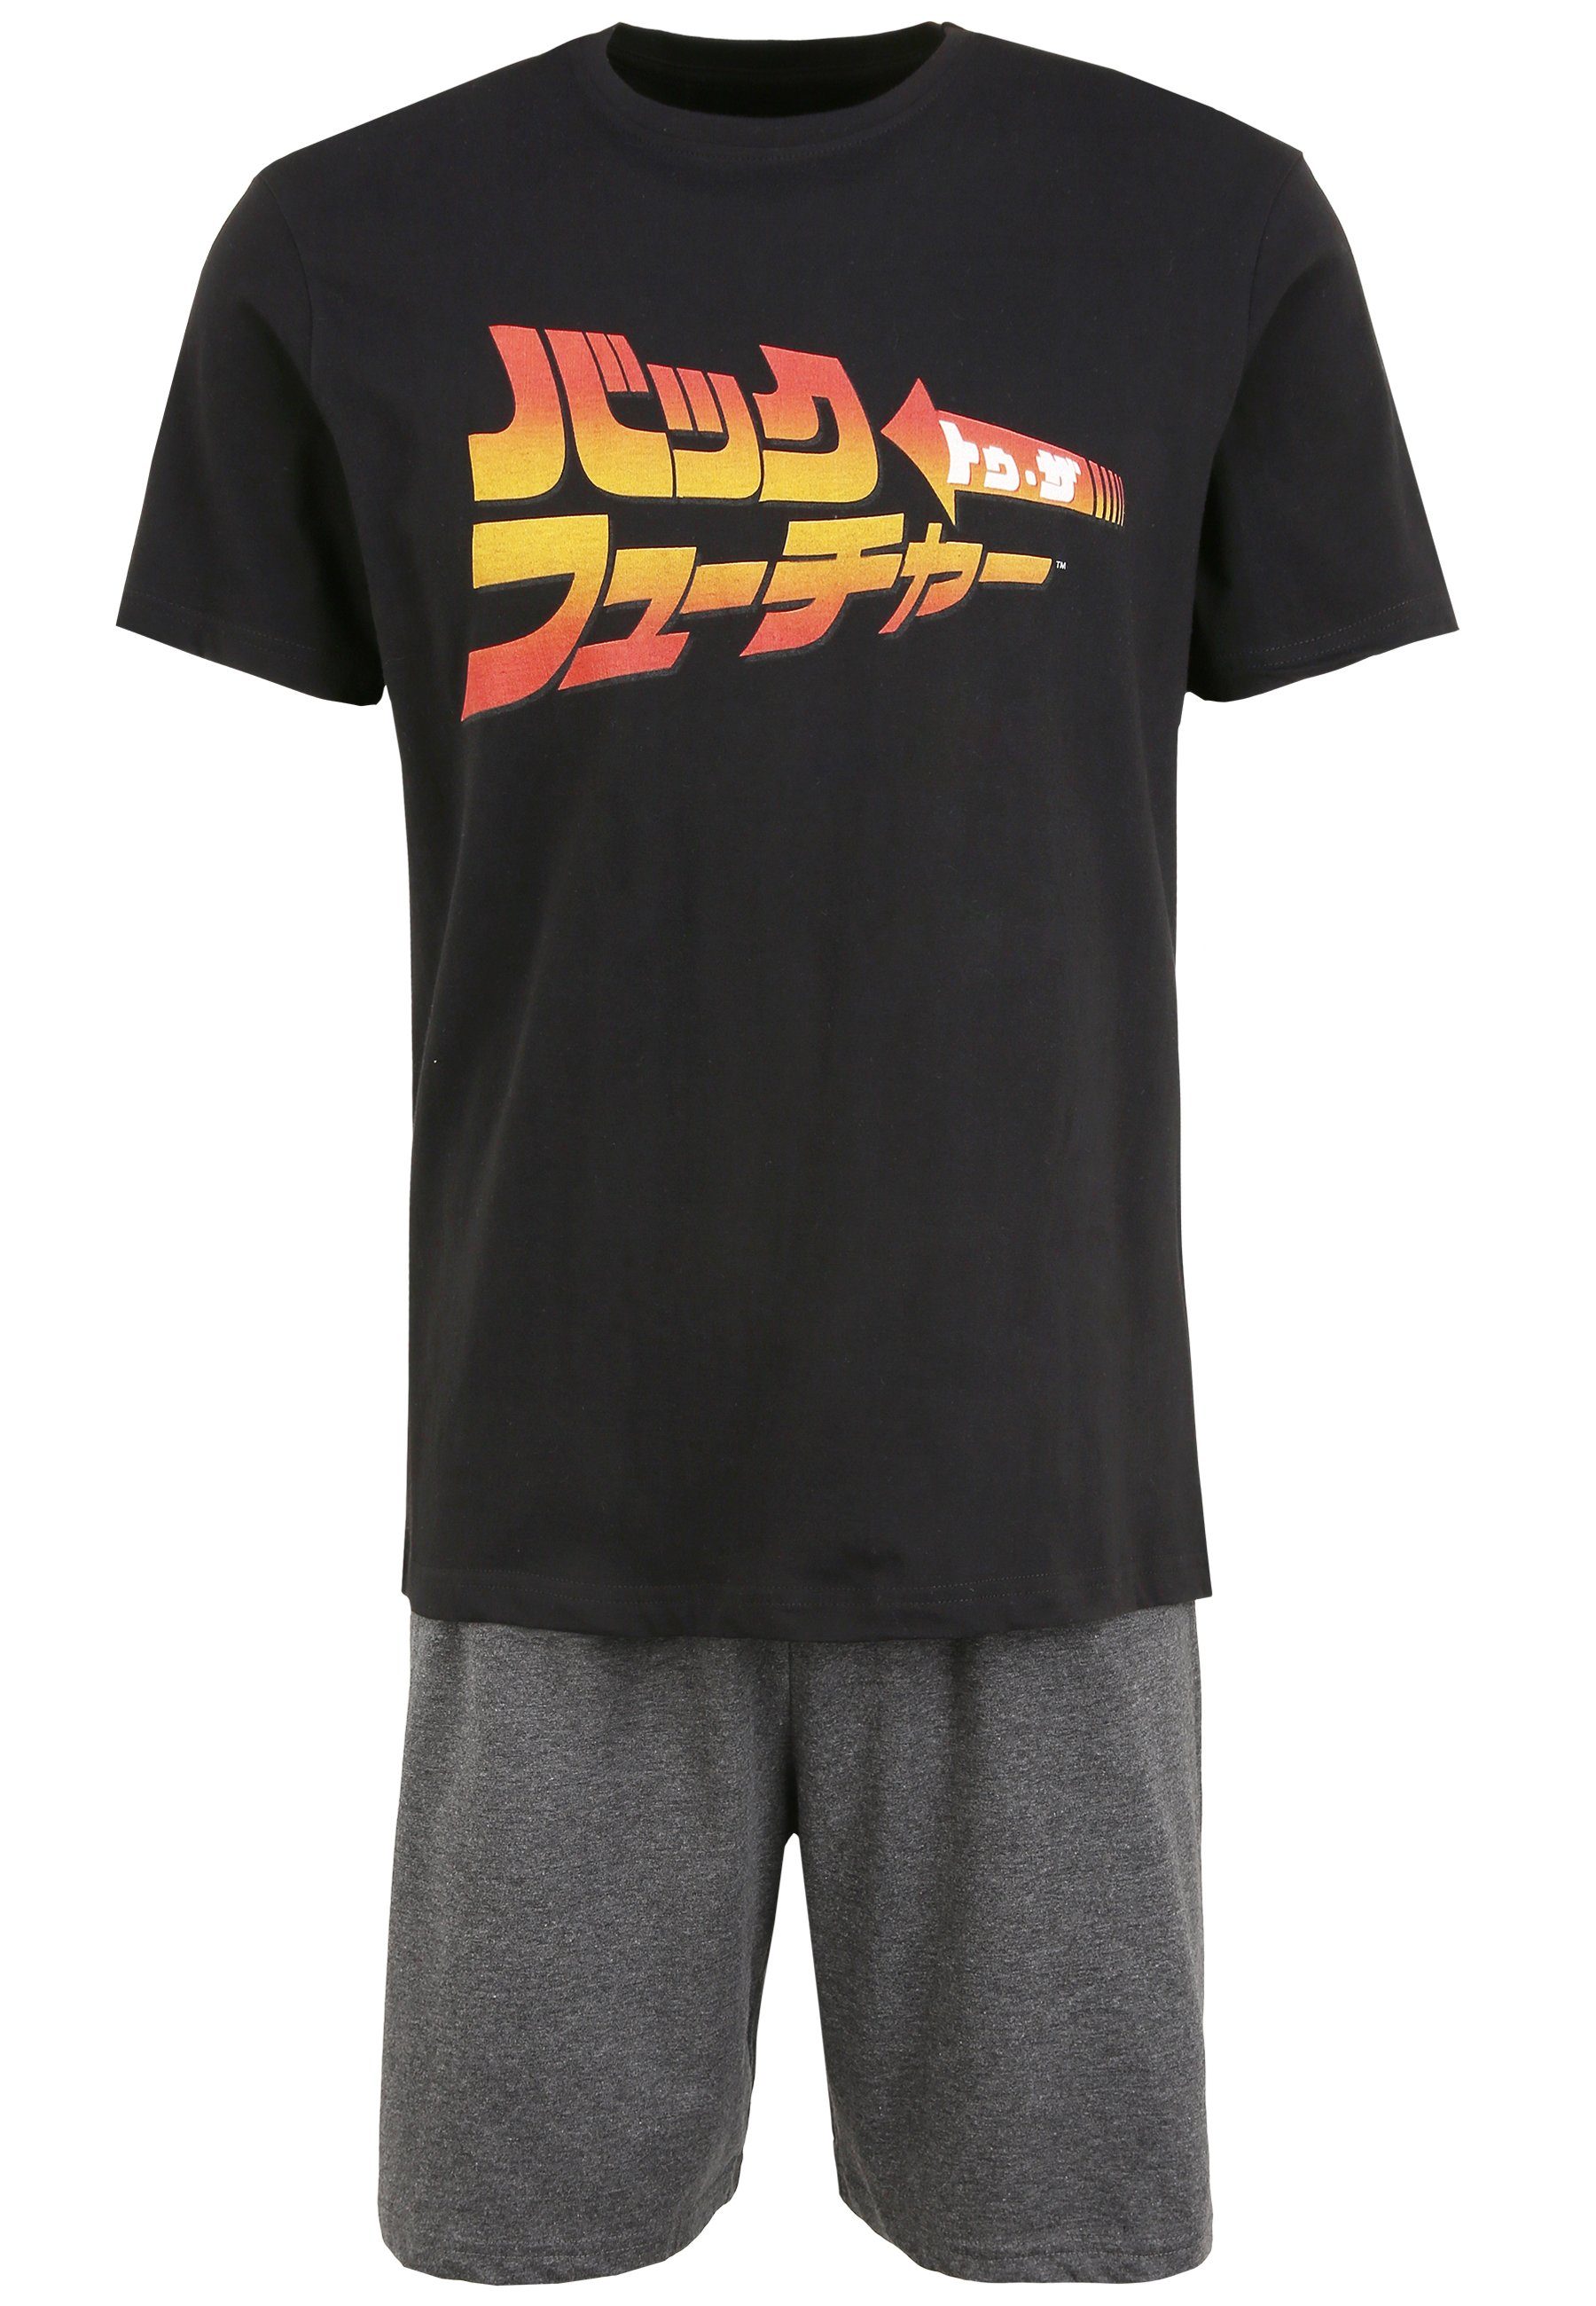 Recovered Loungepants Pyjama Lounge Set - Back to the Future Kanji Logo - Black Charcoal